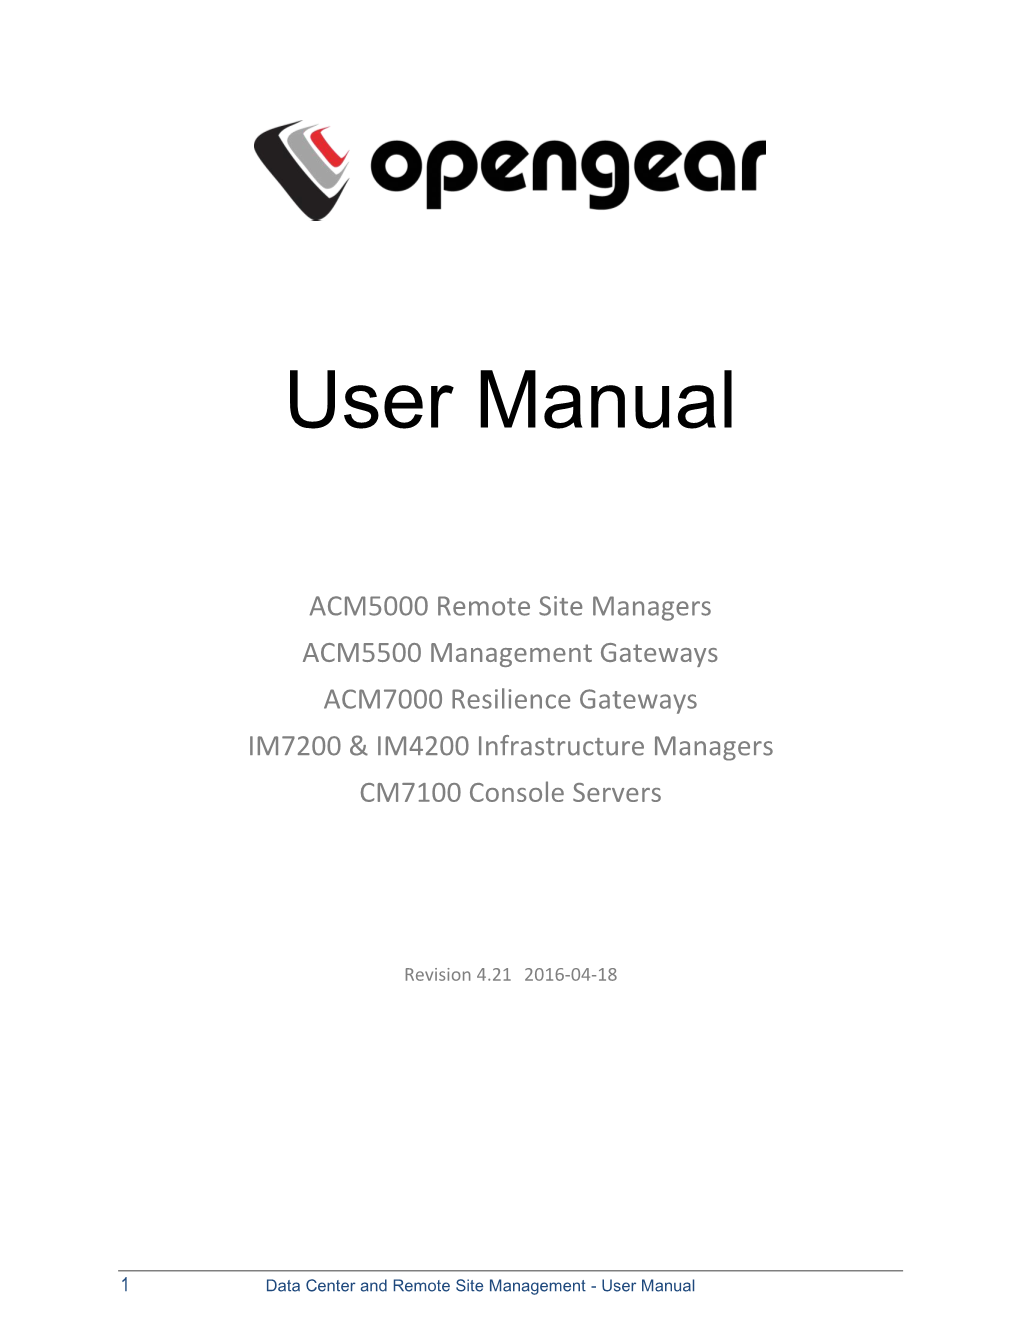 Opengear User Manual 4.21.Pdf